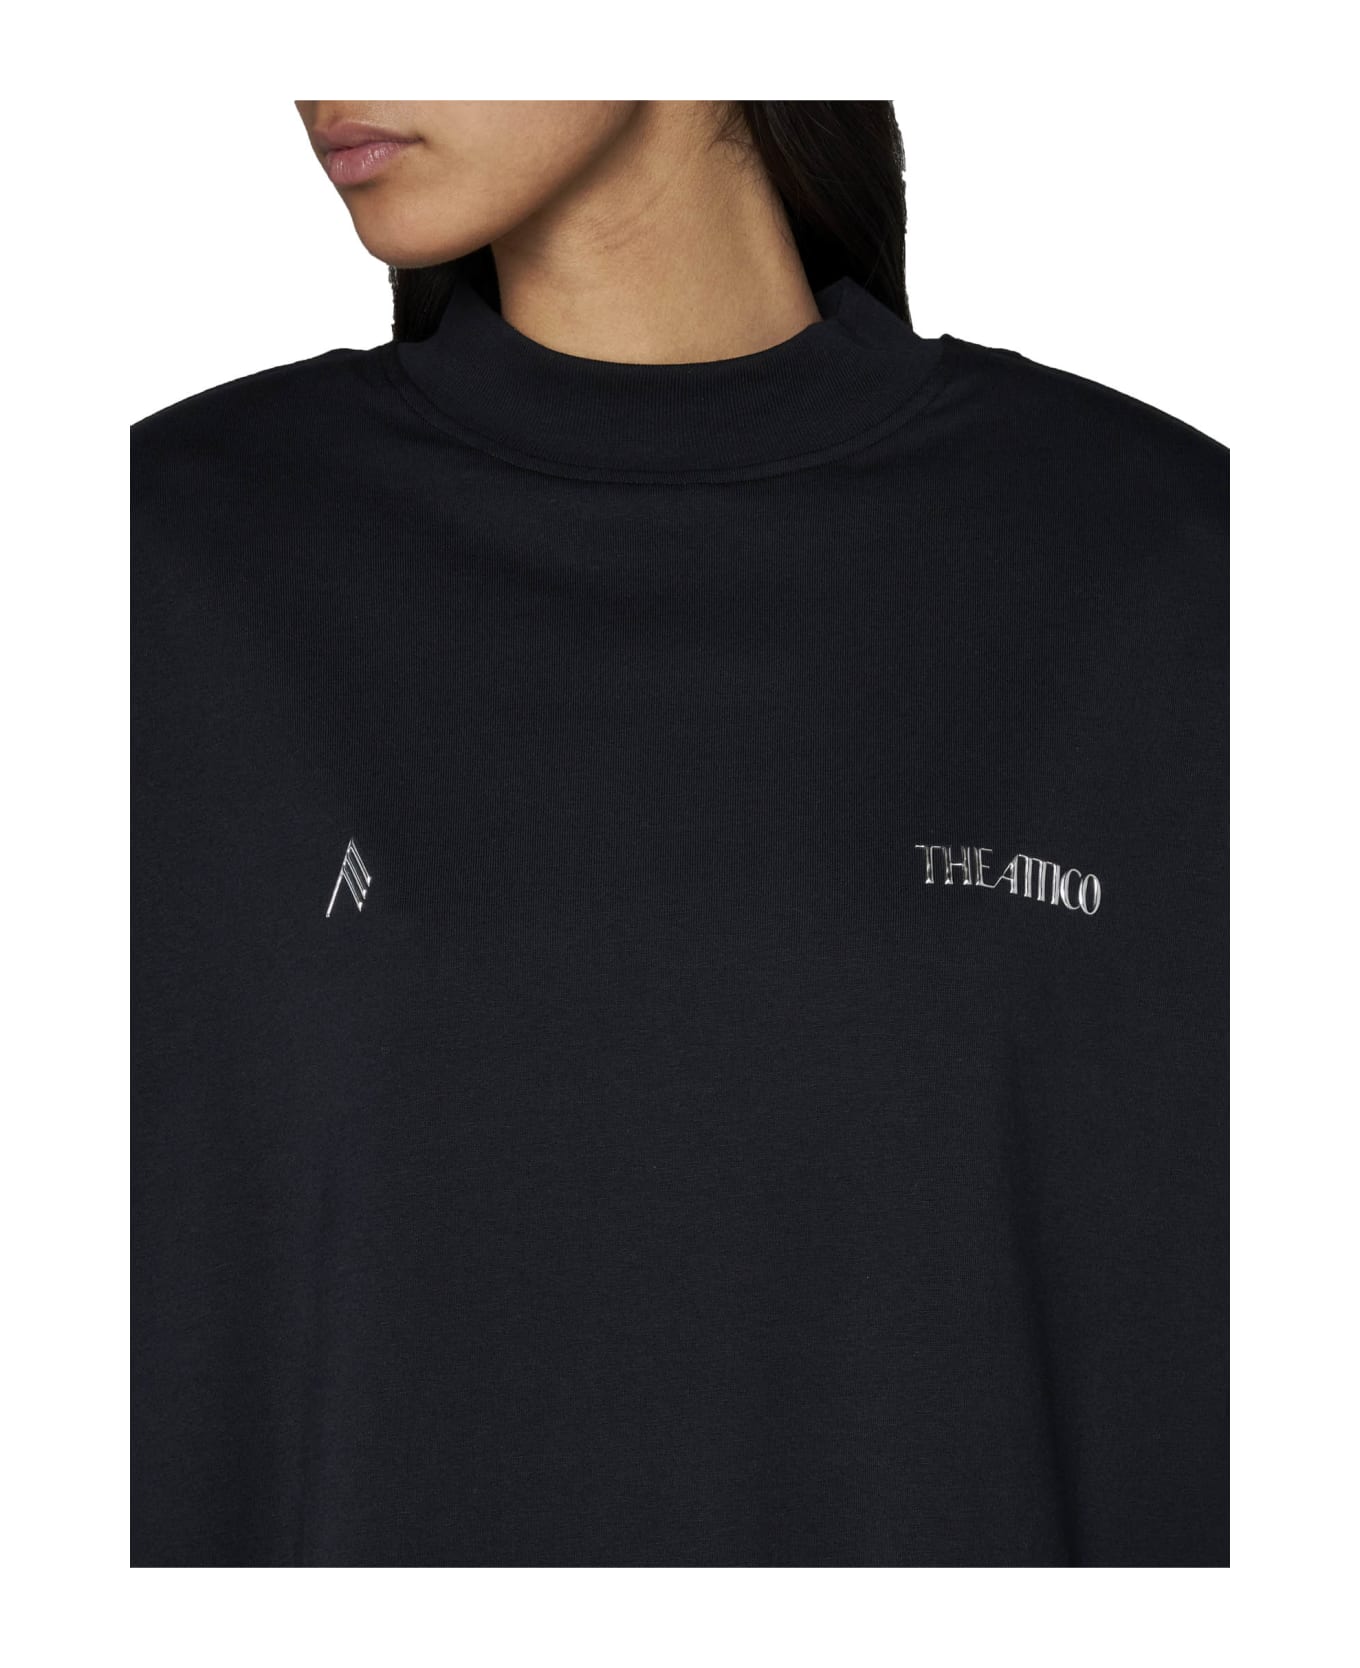 The Attico T-Shirt - Black